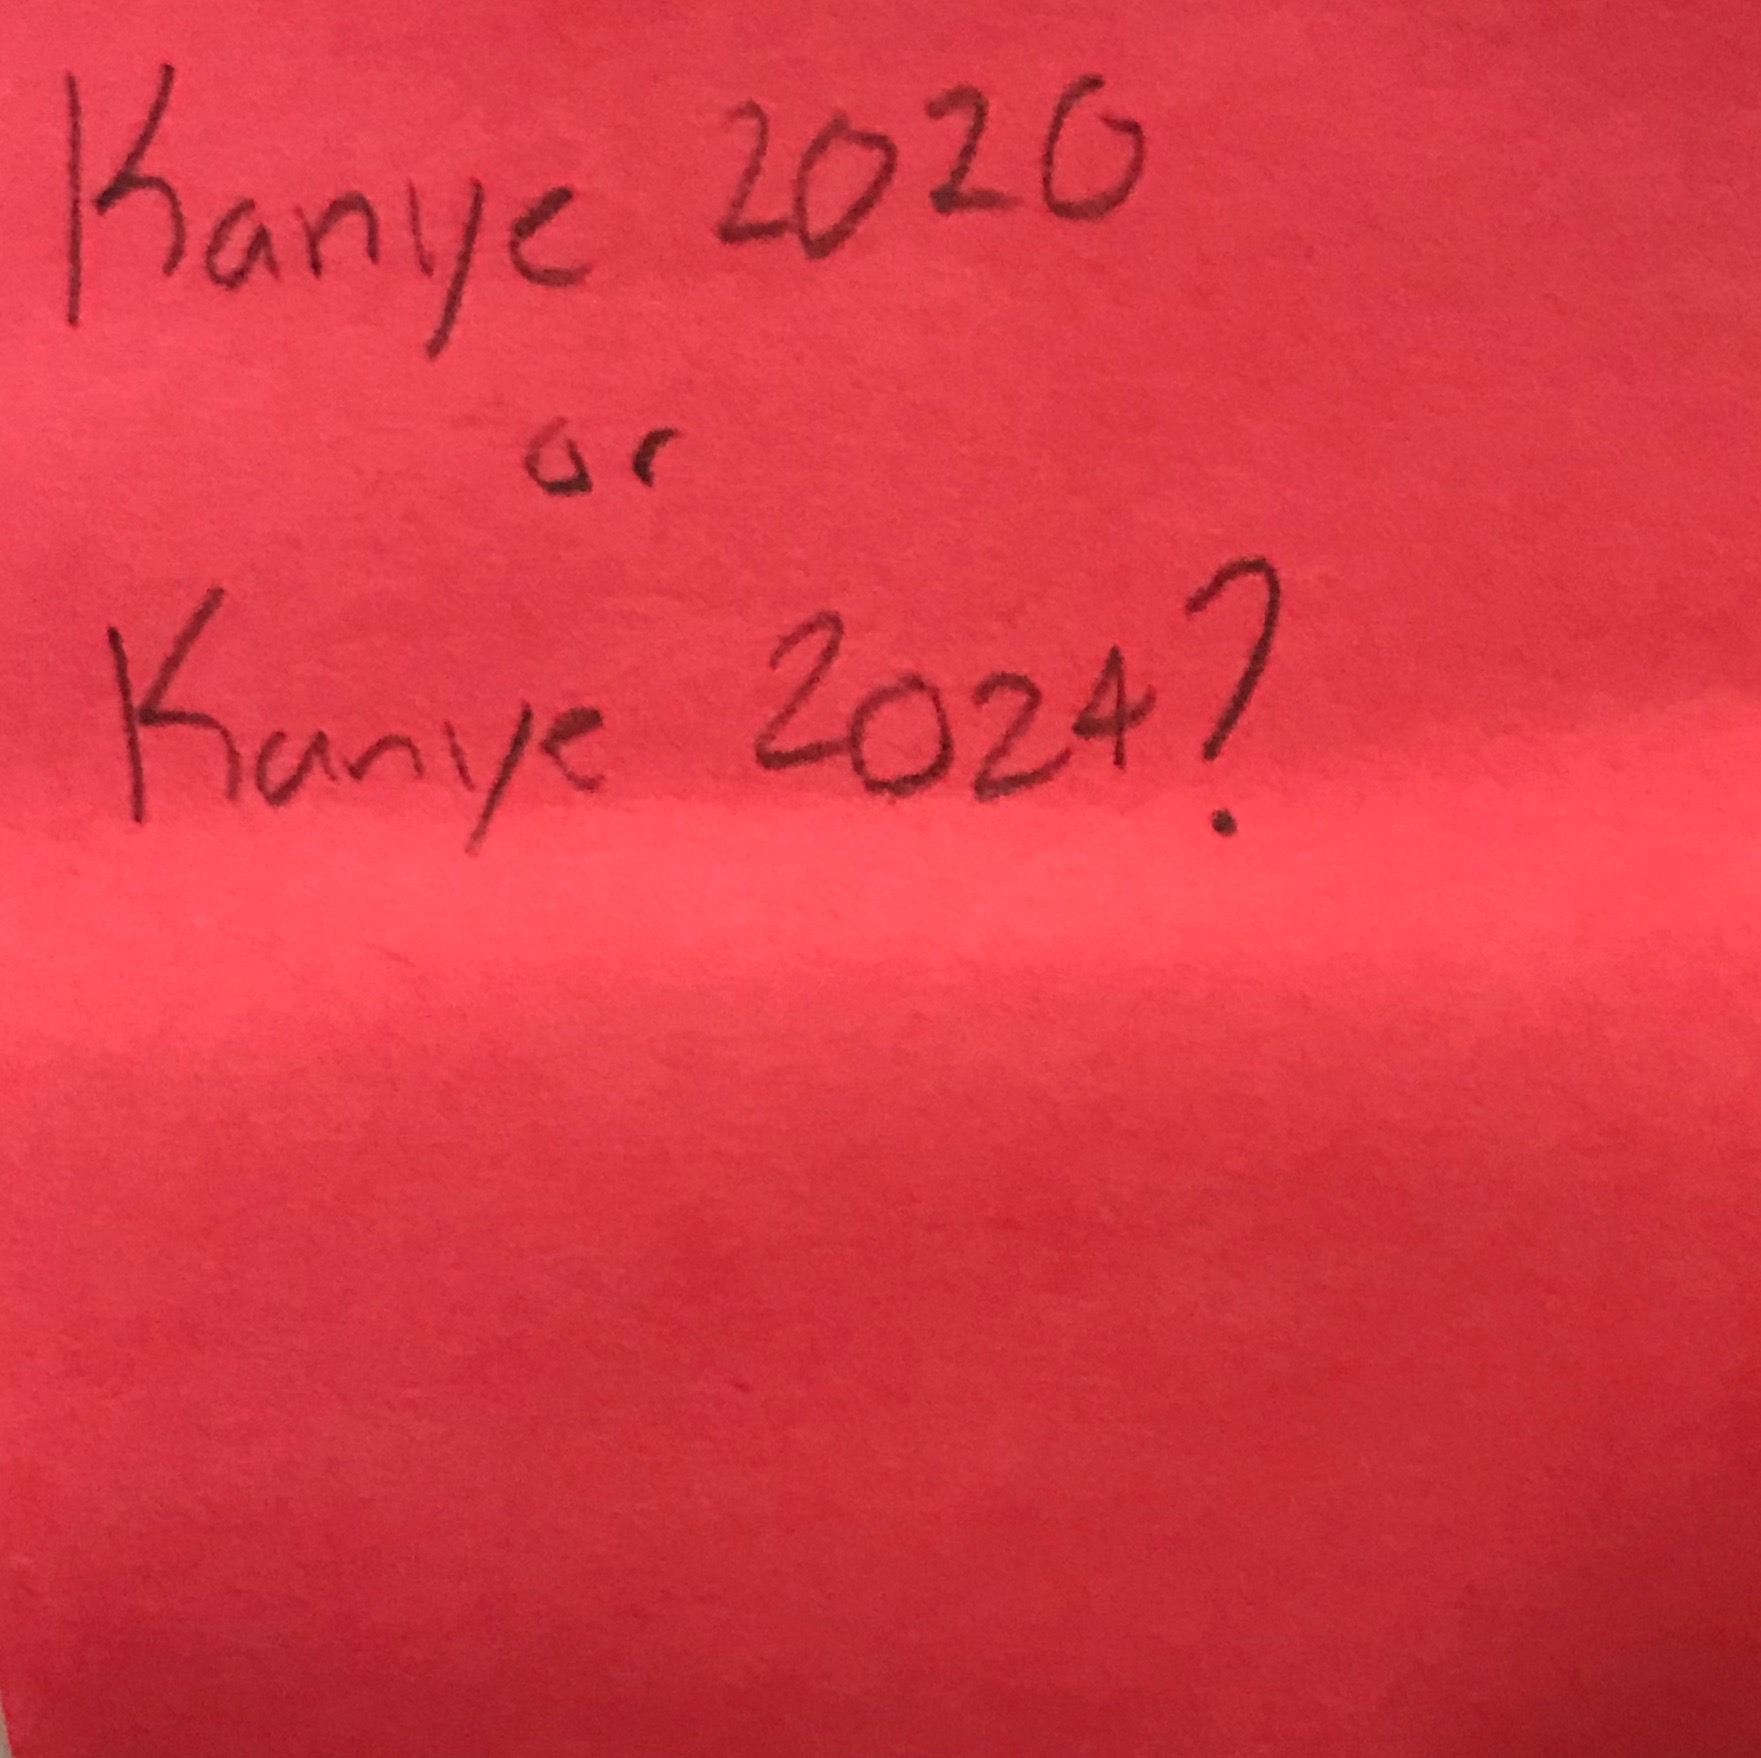 Kanye 2020 or Kanye 2024? The Answer Wall